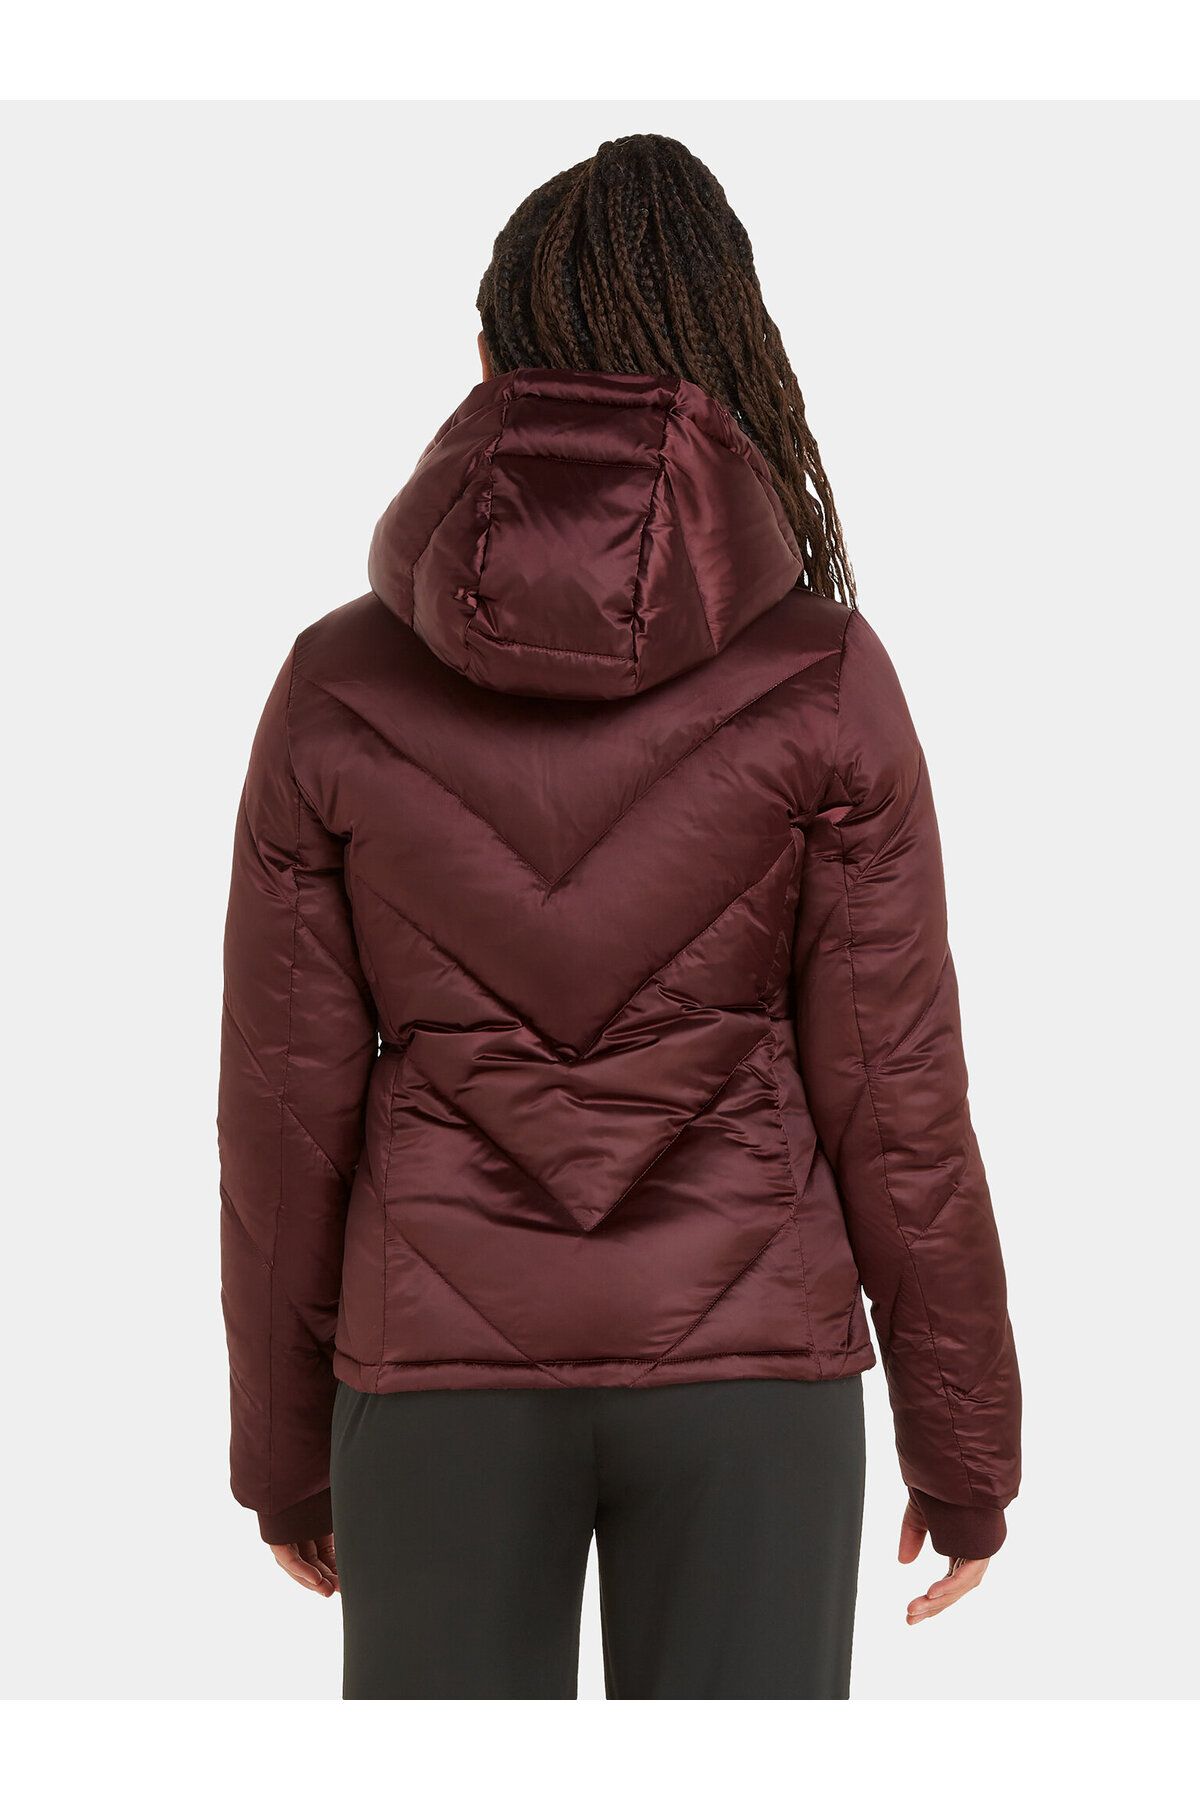 Calvin Klein Winter Jacket - Relaxed fit - Trendyol - Burgundy